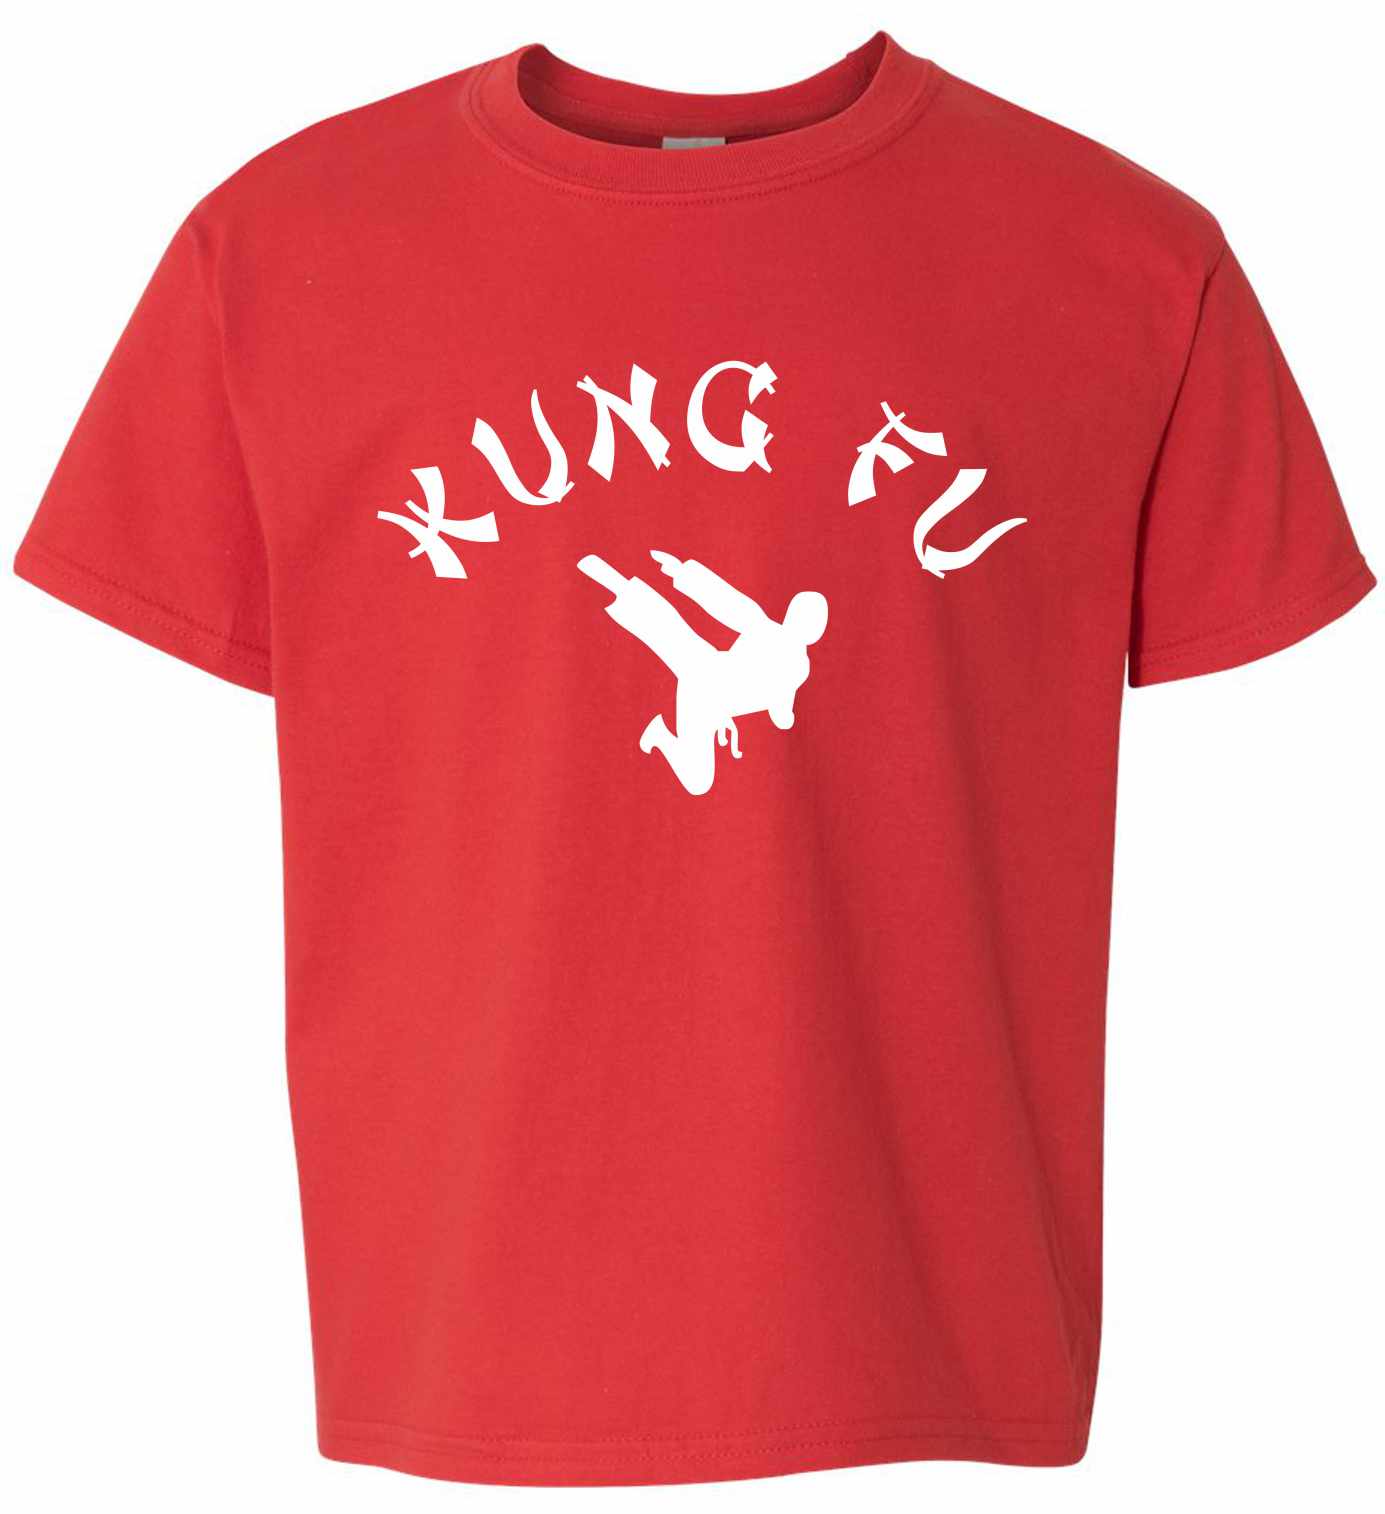 KUNG FU on Kids T-Shirt (#747-201)